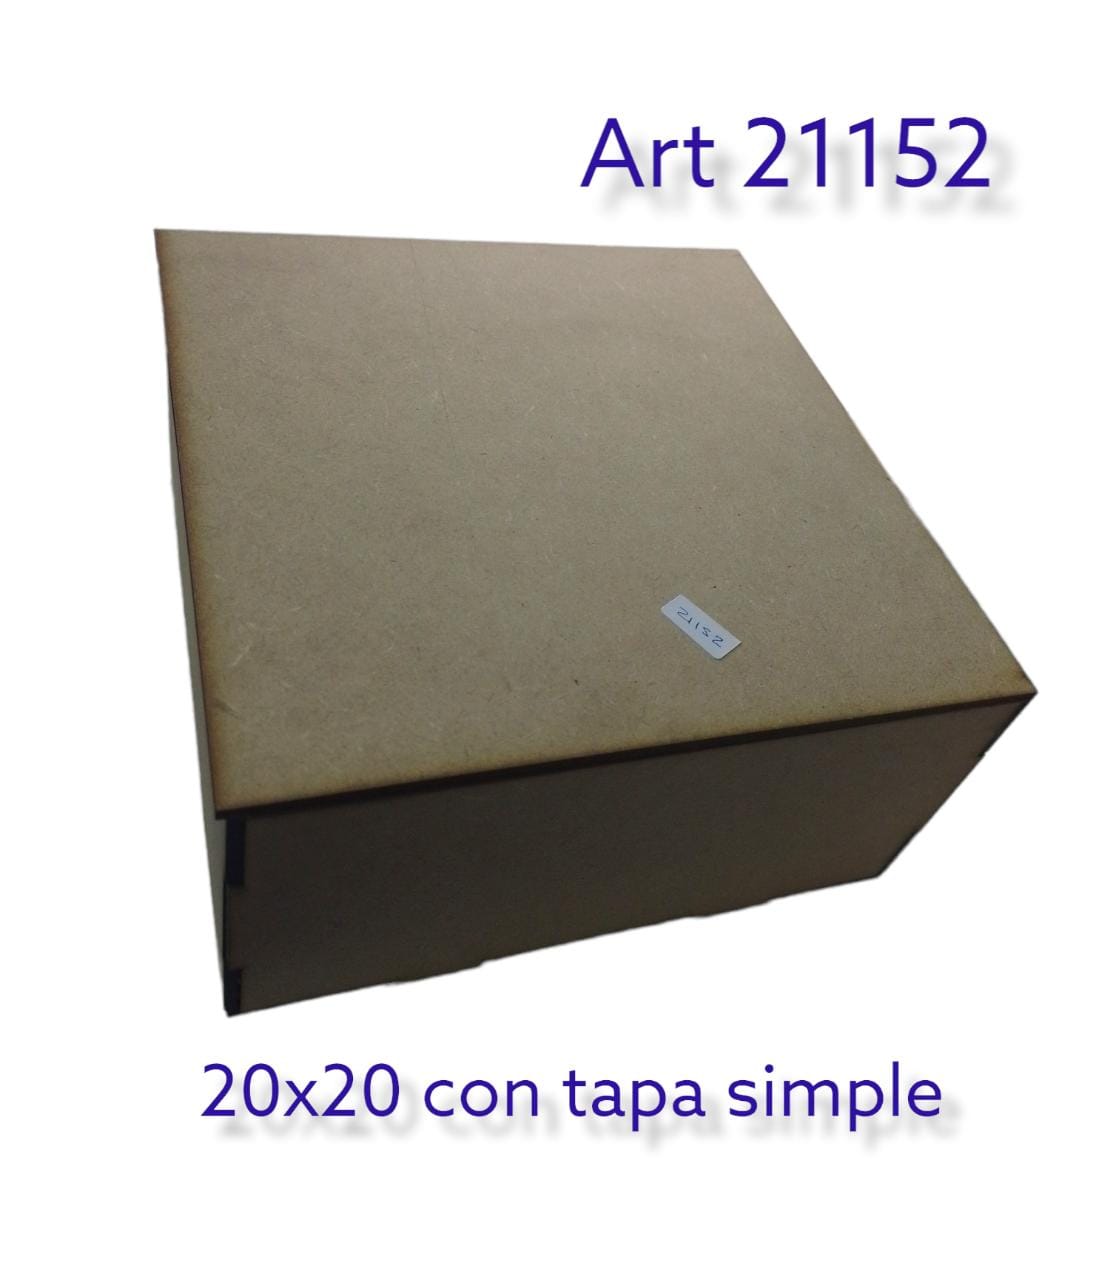 Caja cuadrada simple  20x20 con tapa 